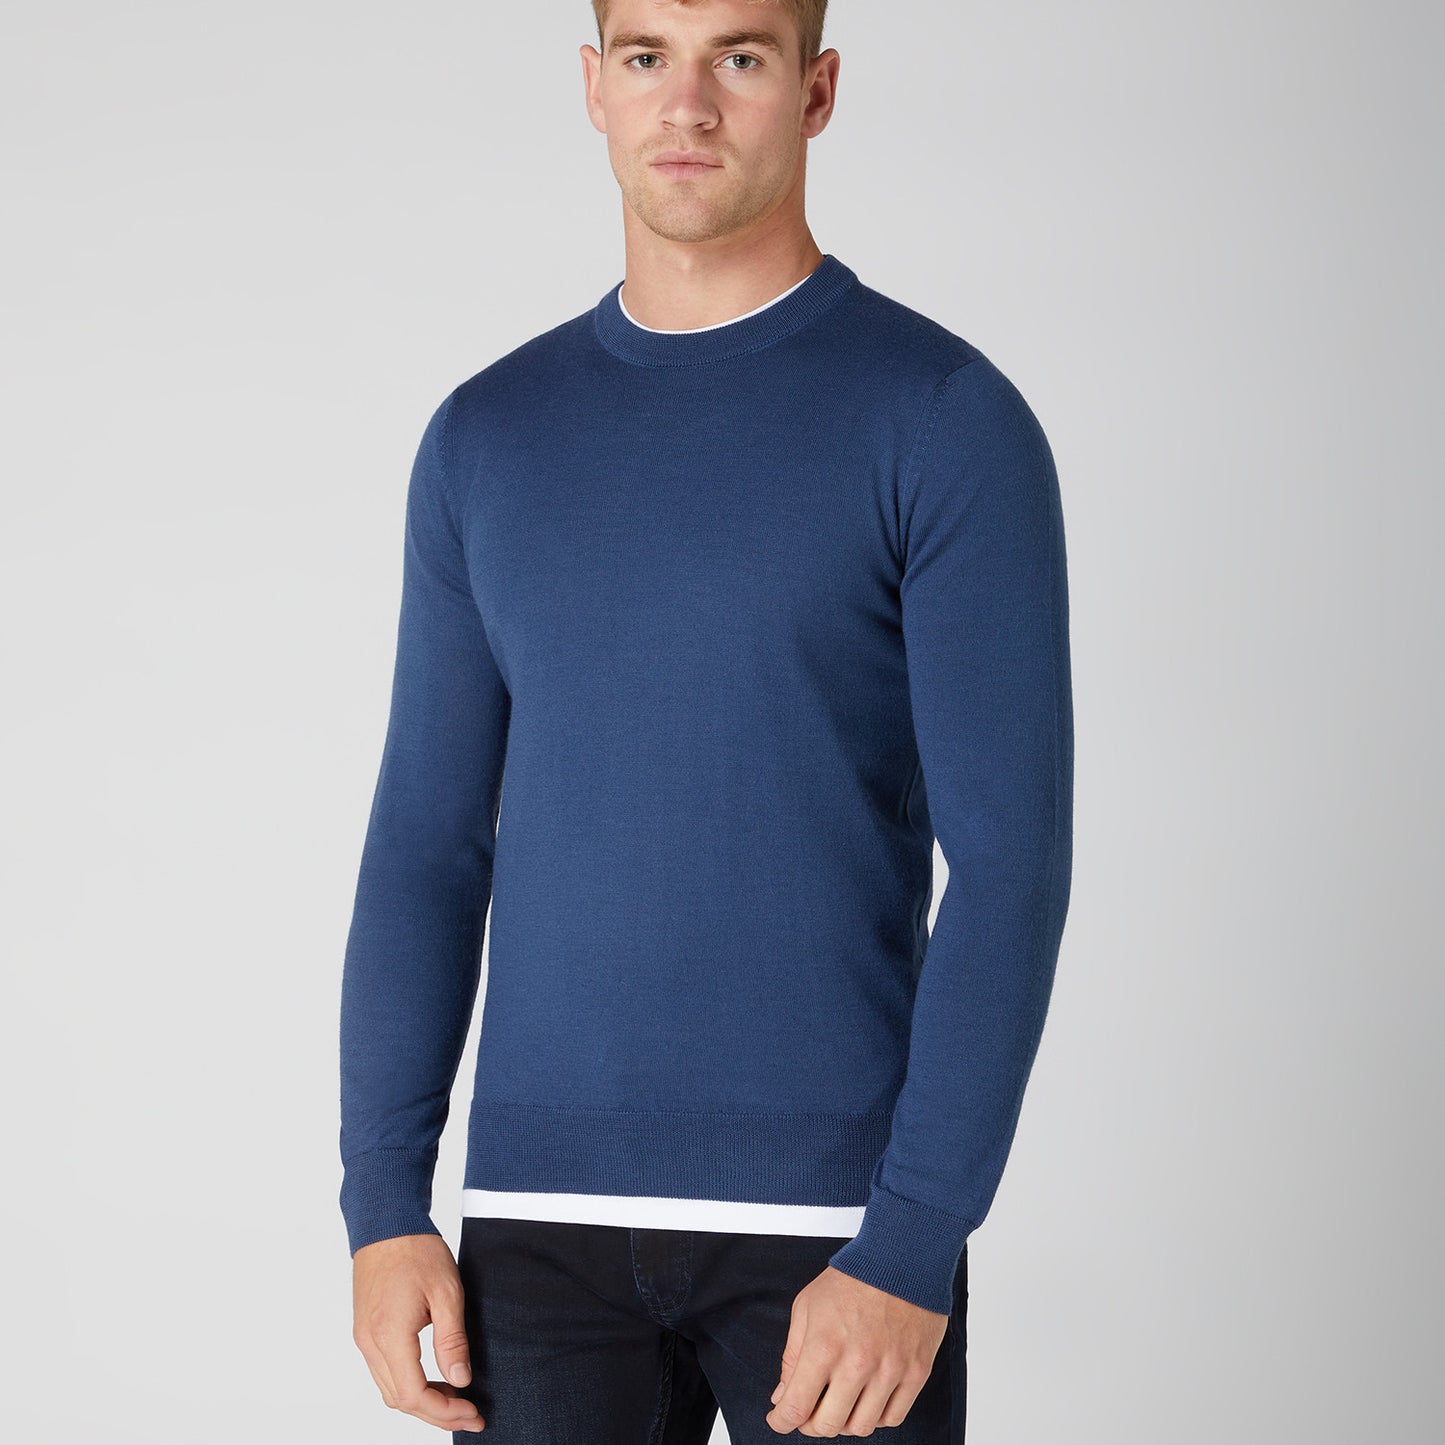 Remus Uomo 58400 27 Slate Blue Long Sleeve Crew Neck Sweater